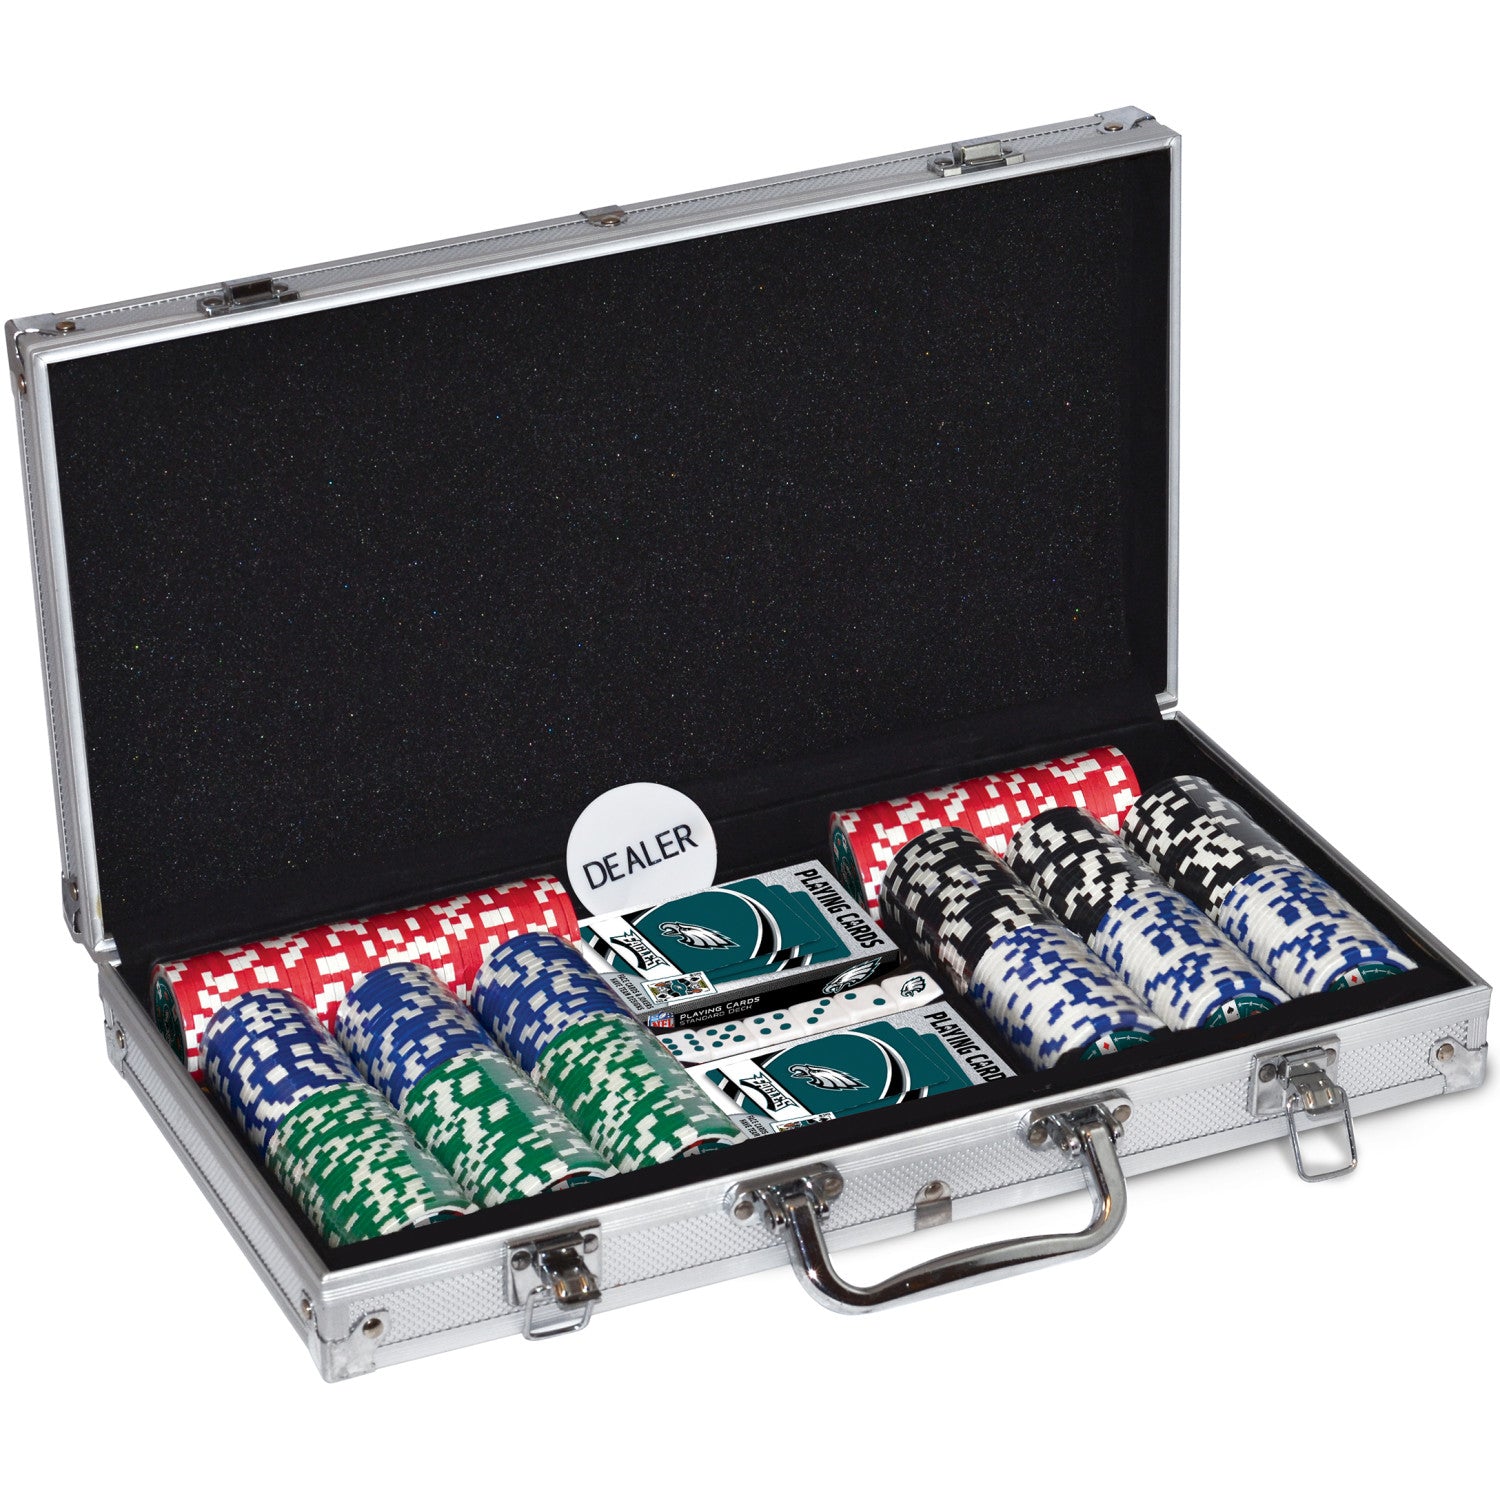 Philadelphia Eagles 300 Piece Poker Set